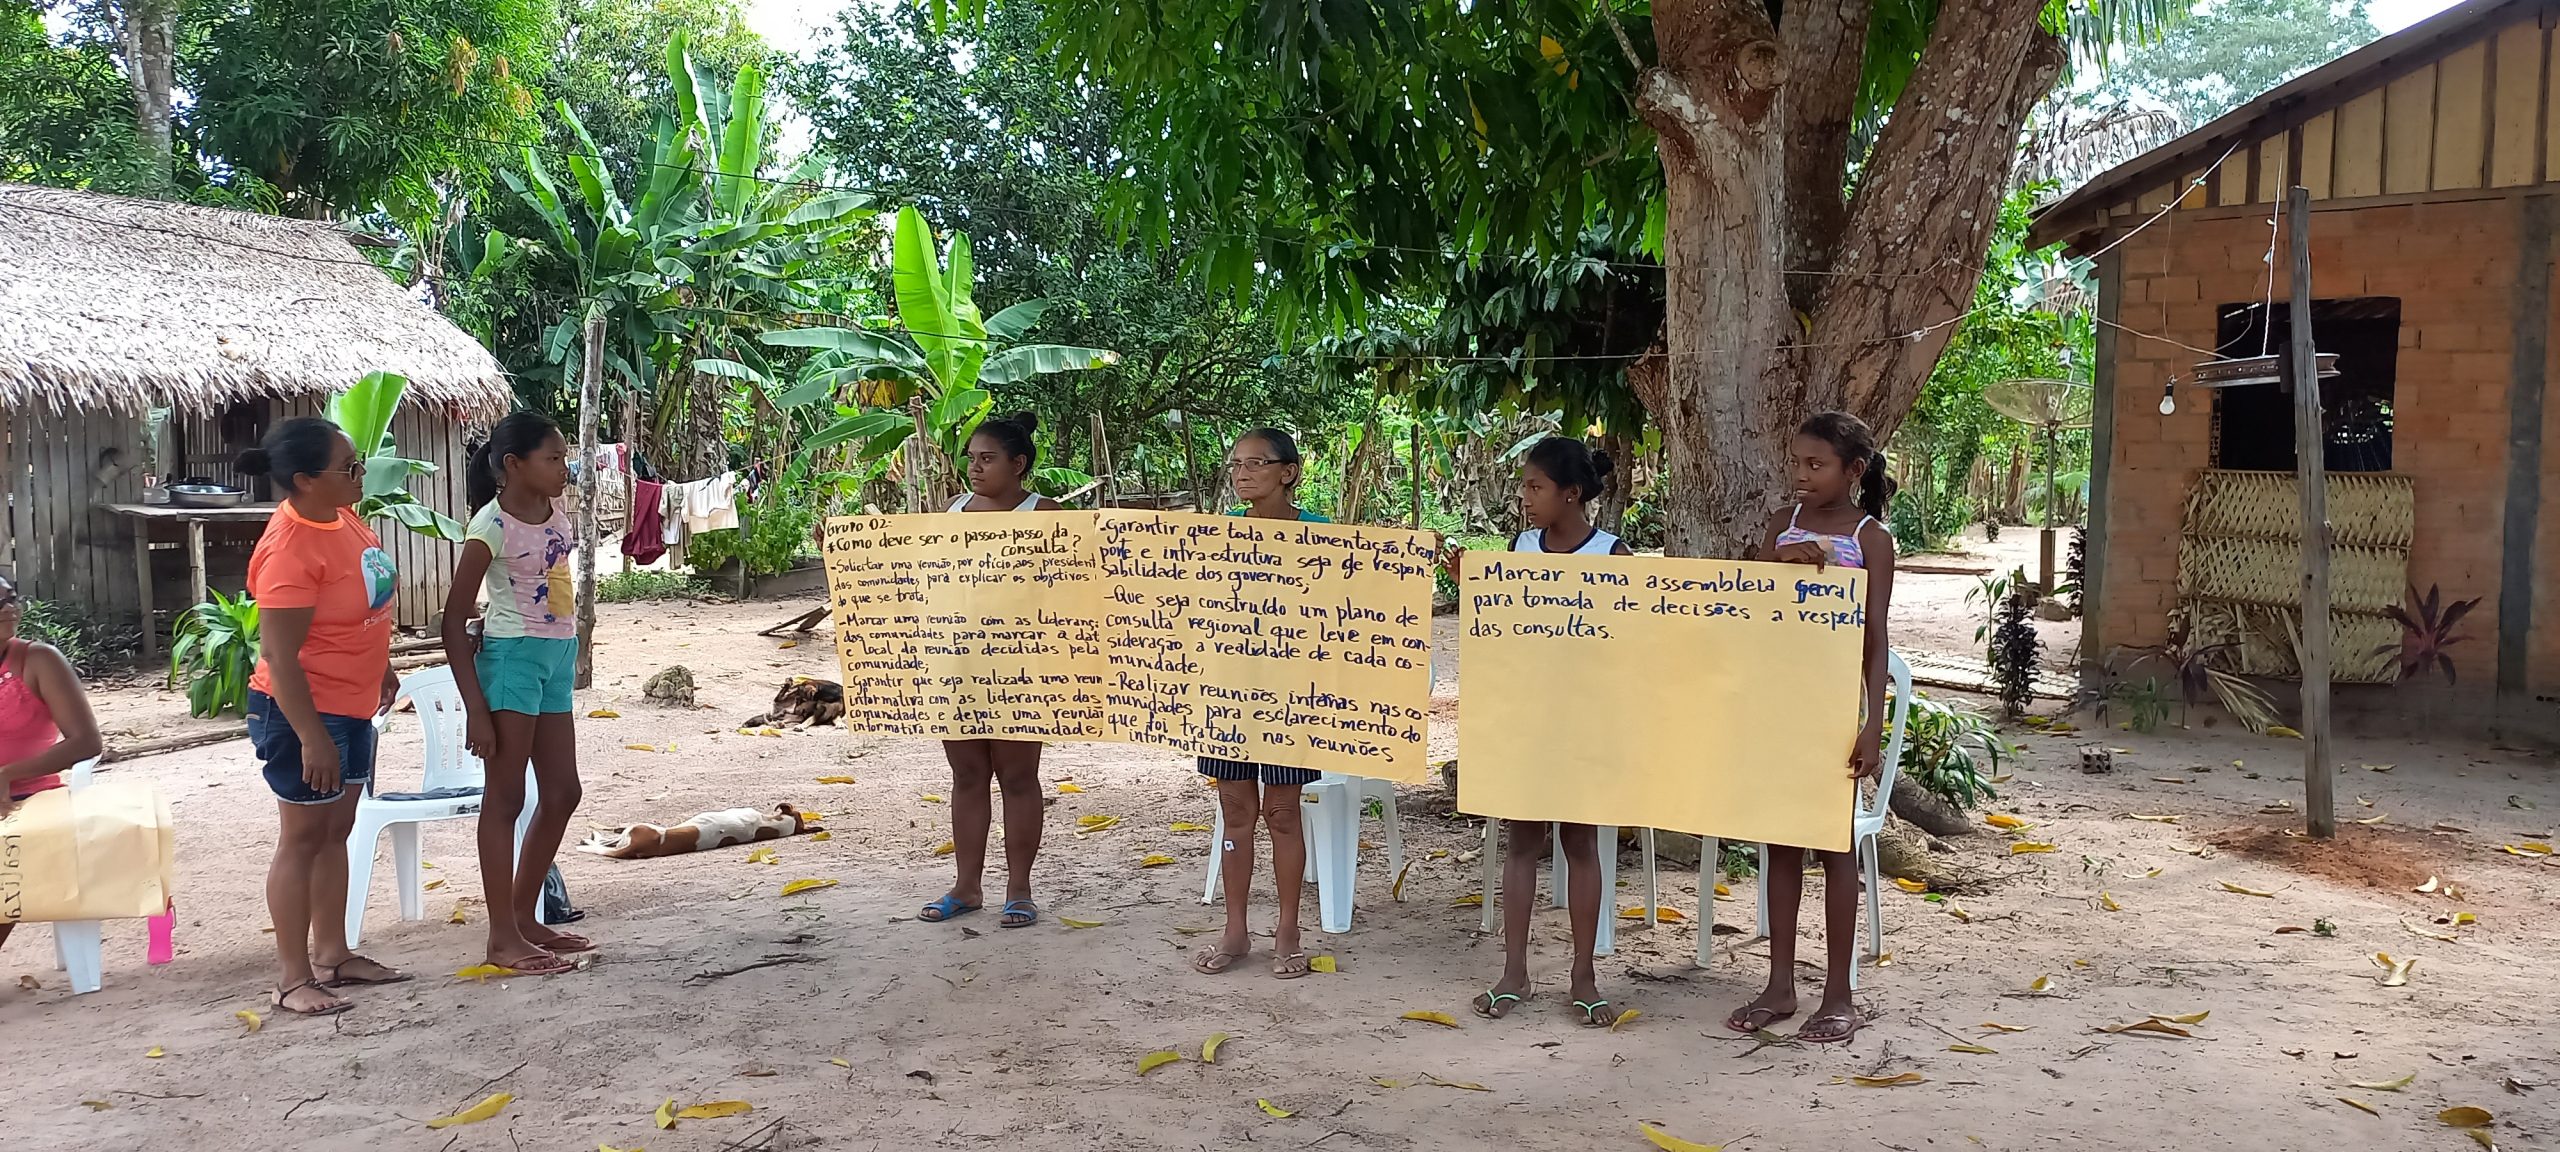 Protocolo de Consulta e Consentimento Prévio protege comunidades na Amazônia